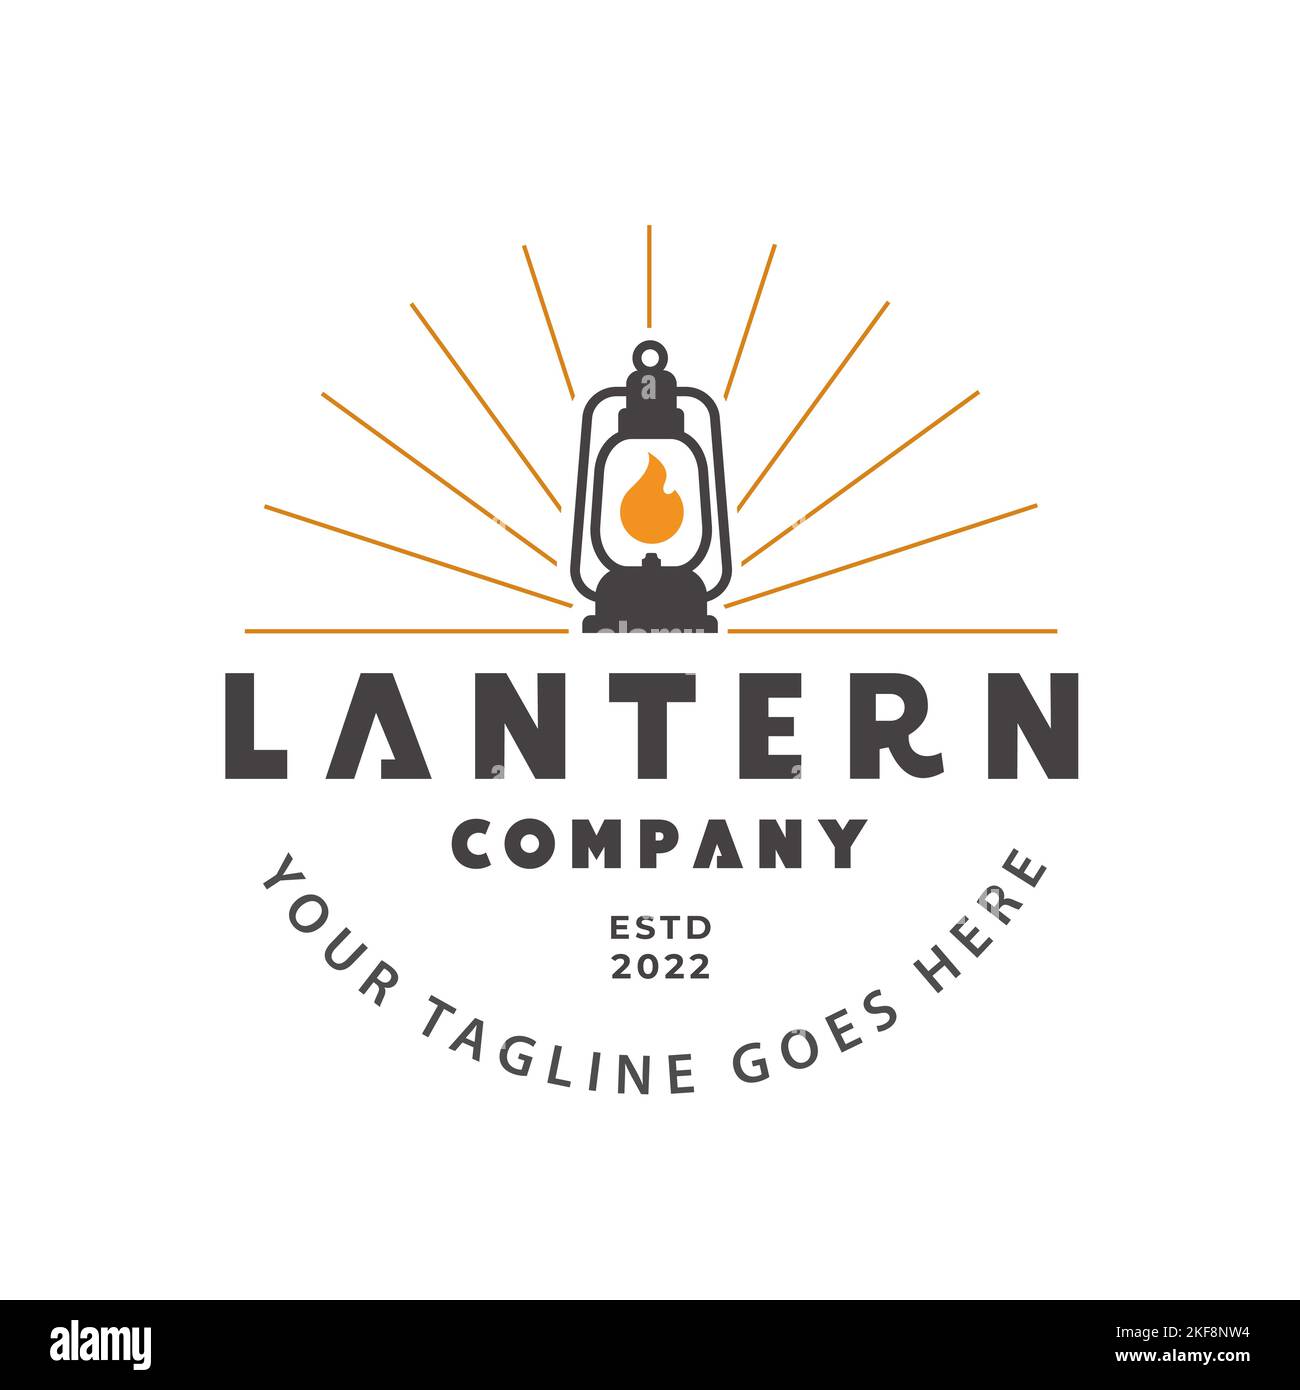 Vintage Restaurant Lantern Inspiration ray of light classic lamp logo icon design Design Template Stock Vector